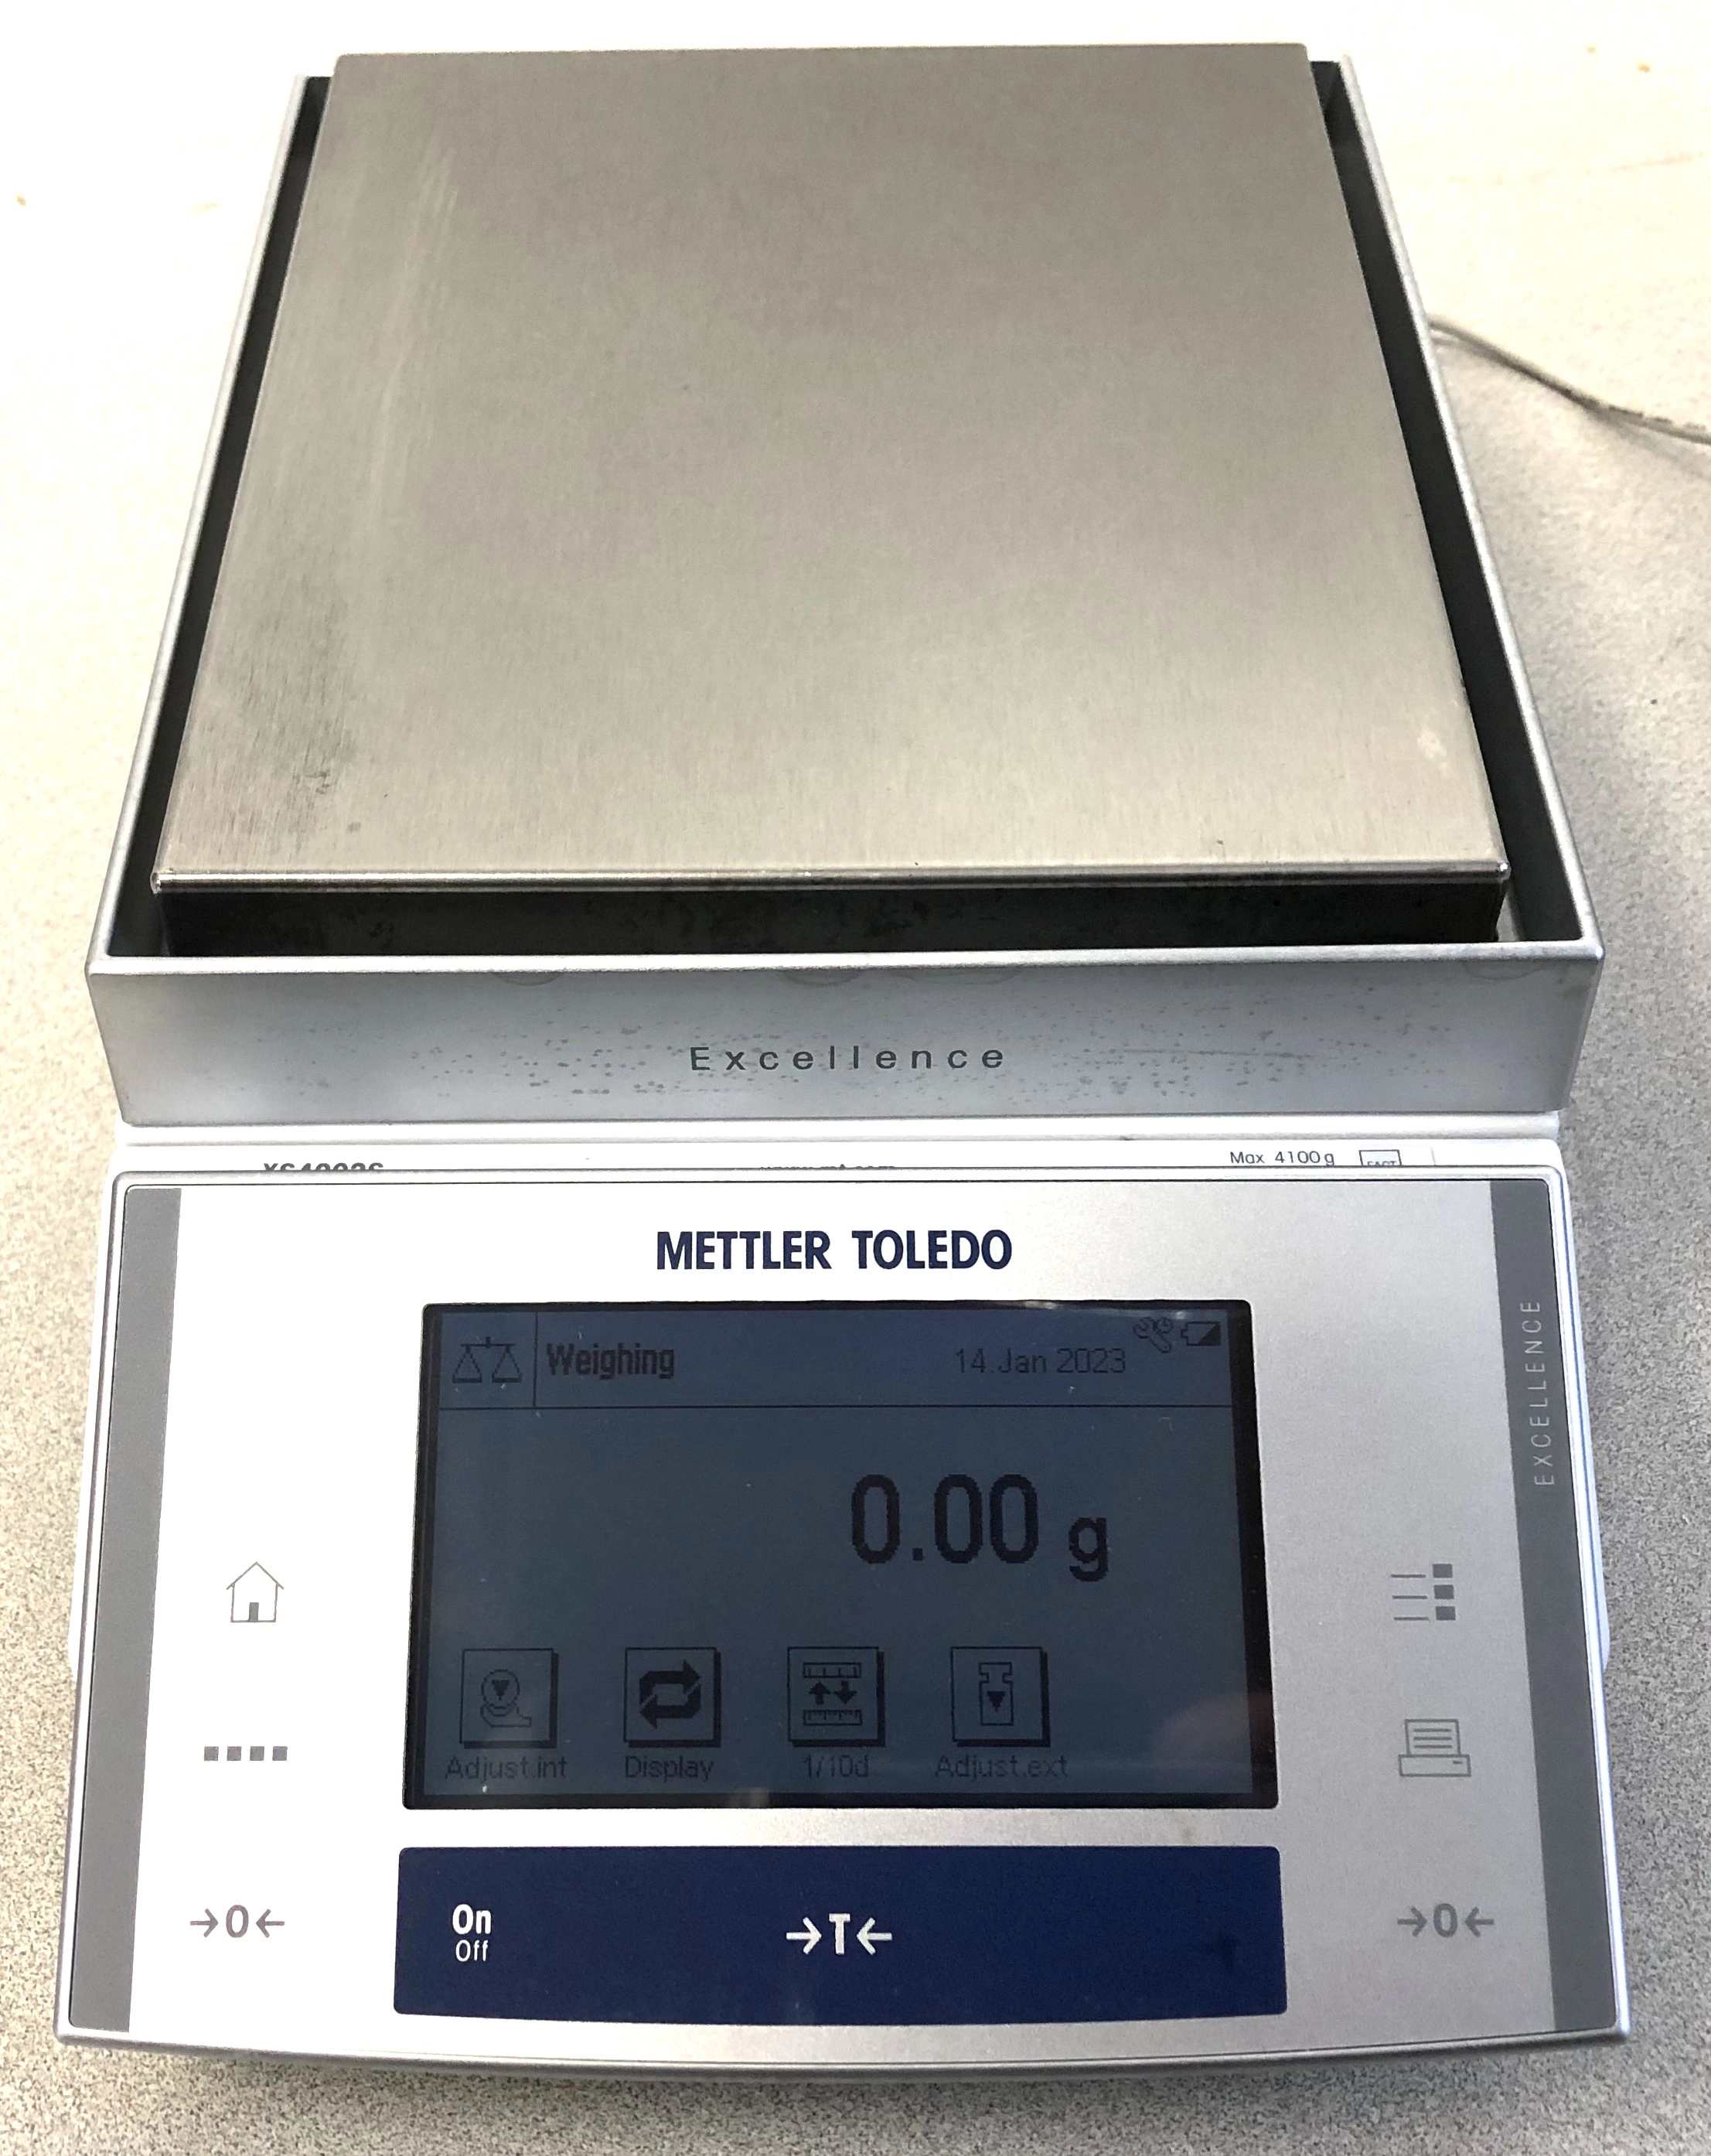 Mettler Toledo Excellence XS4002S FACT Top-Loading Balance (4100g x 0.01g)